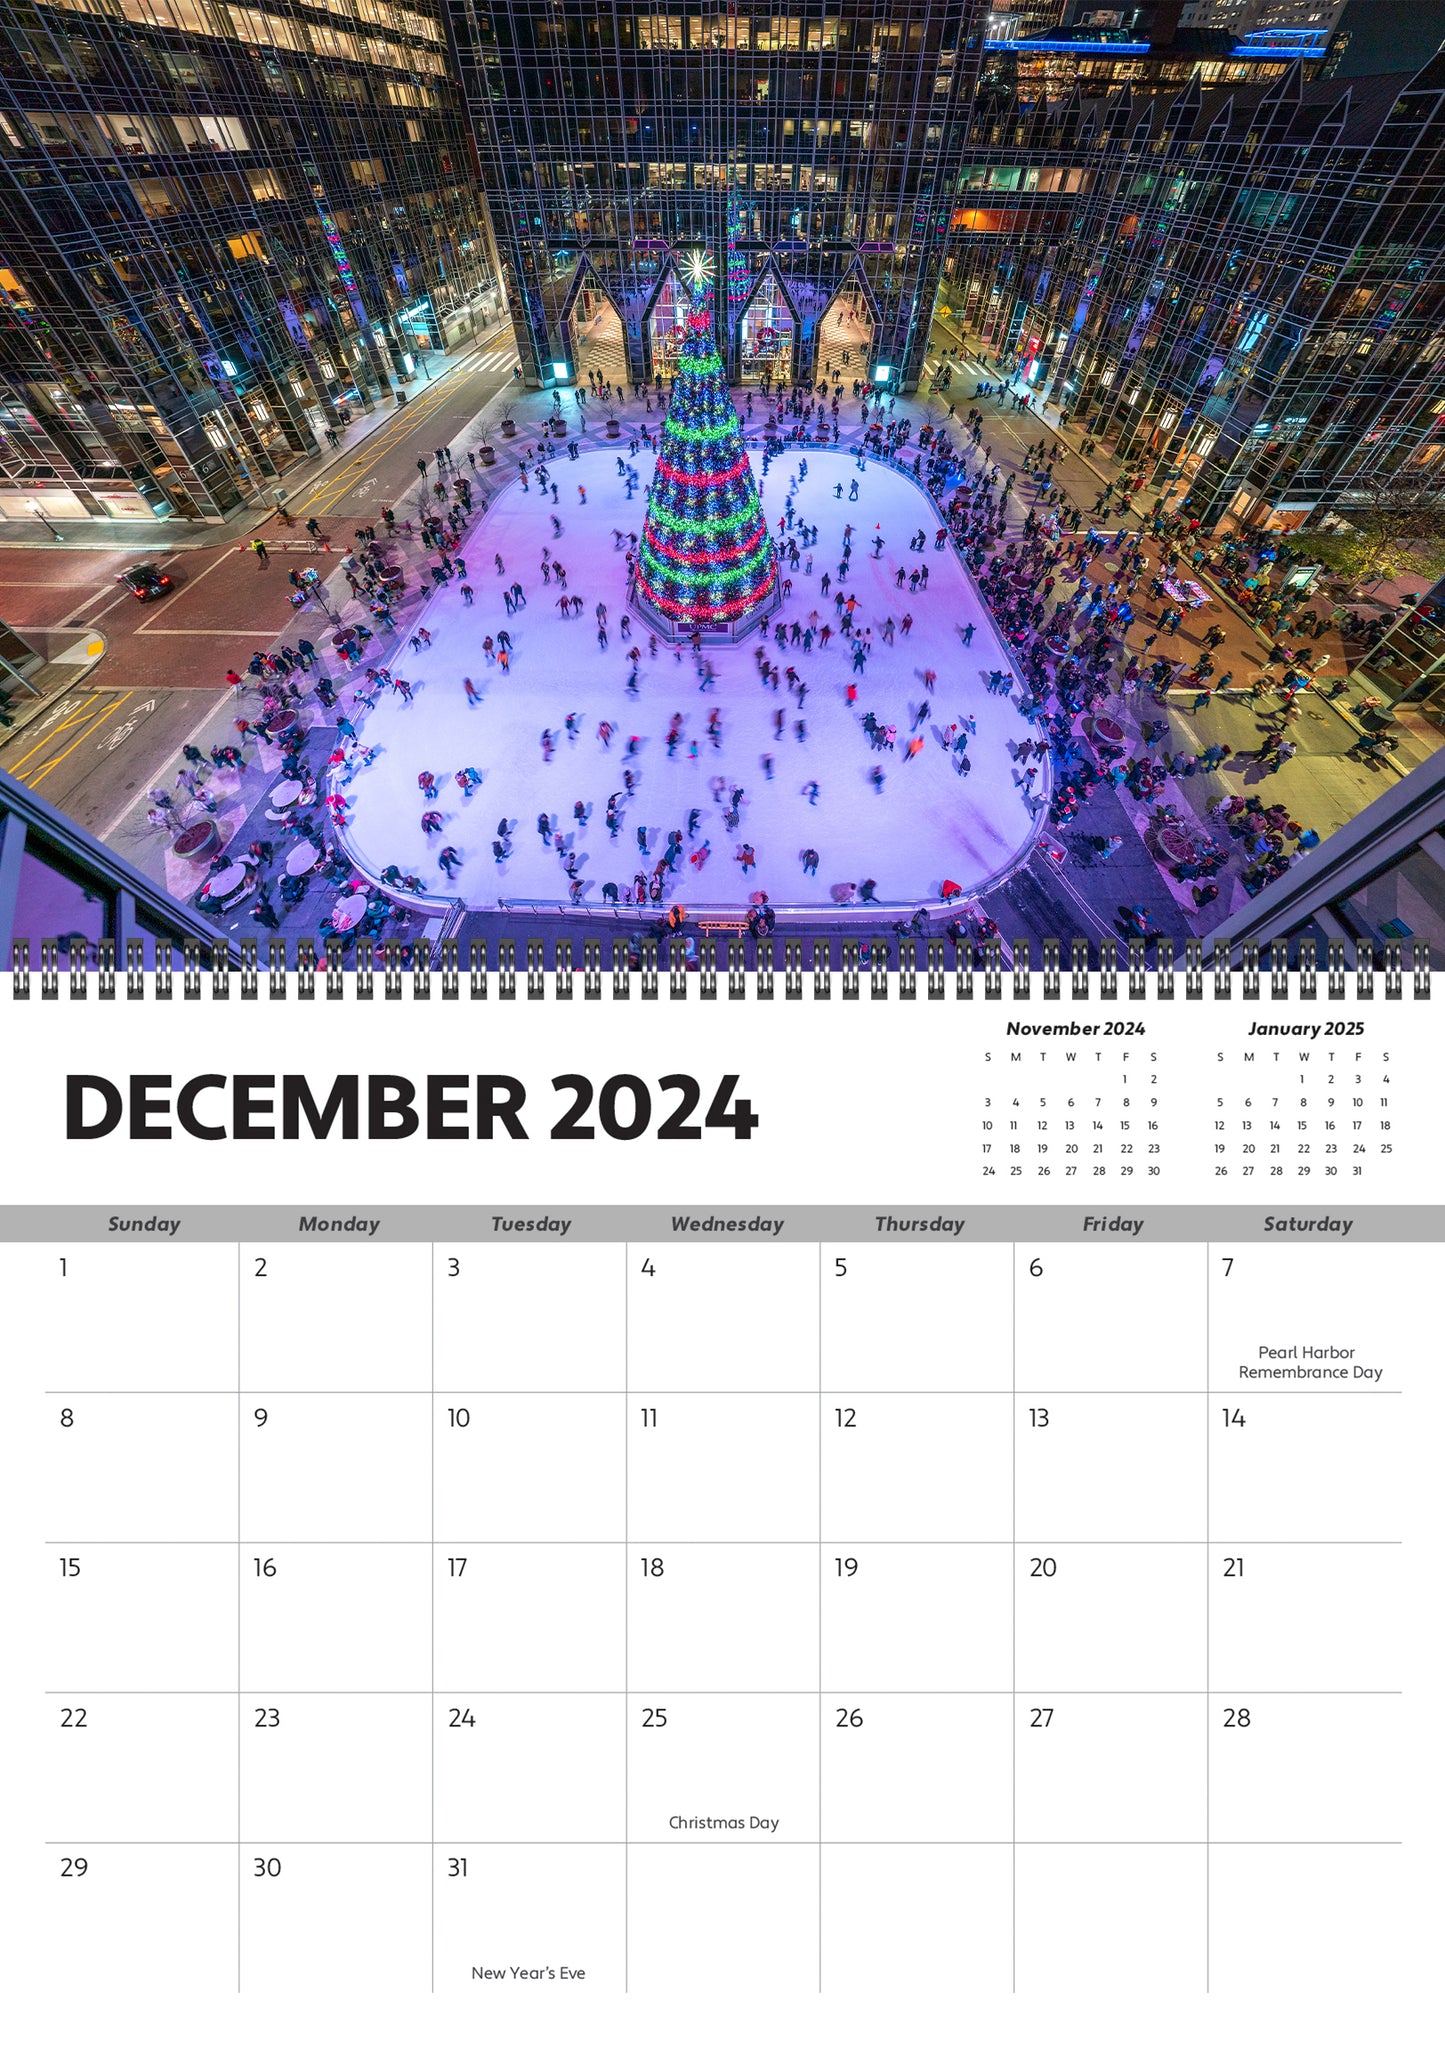 2024 Pittsburgh Wall Calendar